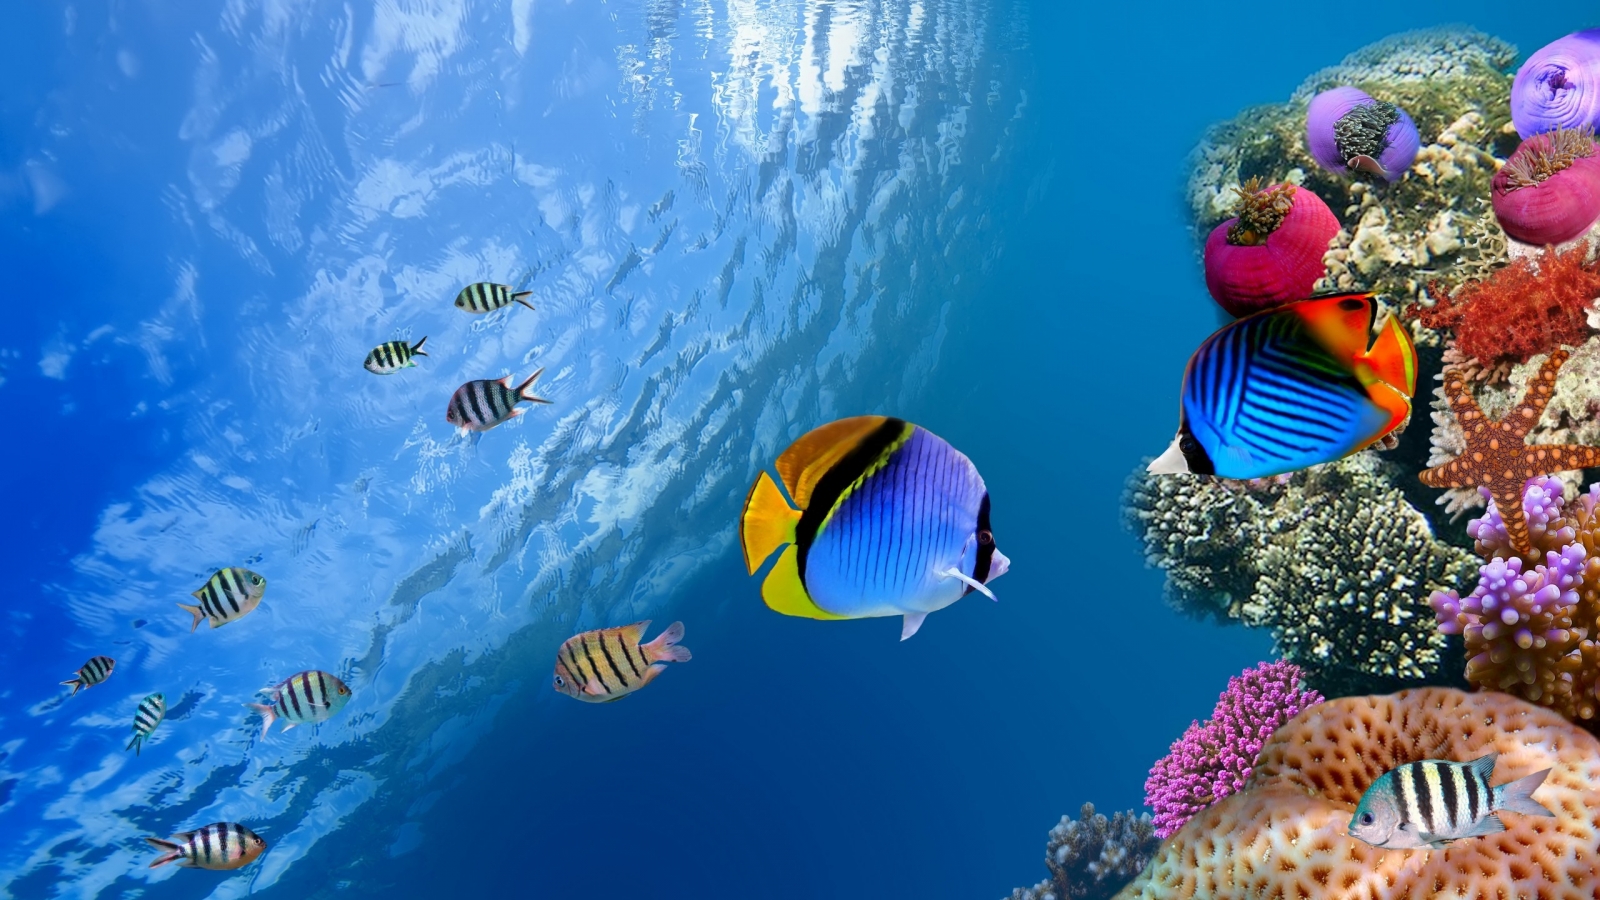 Underwater Coral Scene for 1600 x 900 HDTV resolution